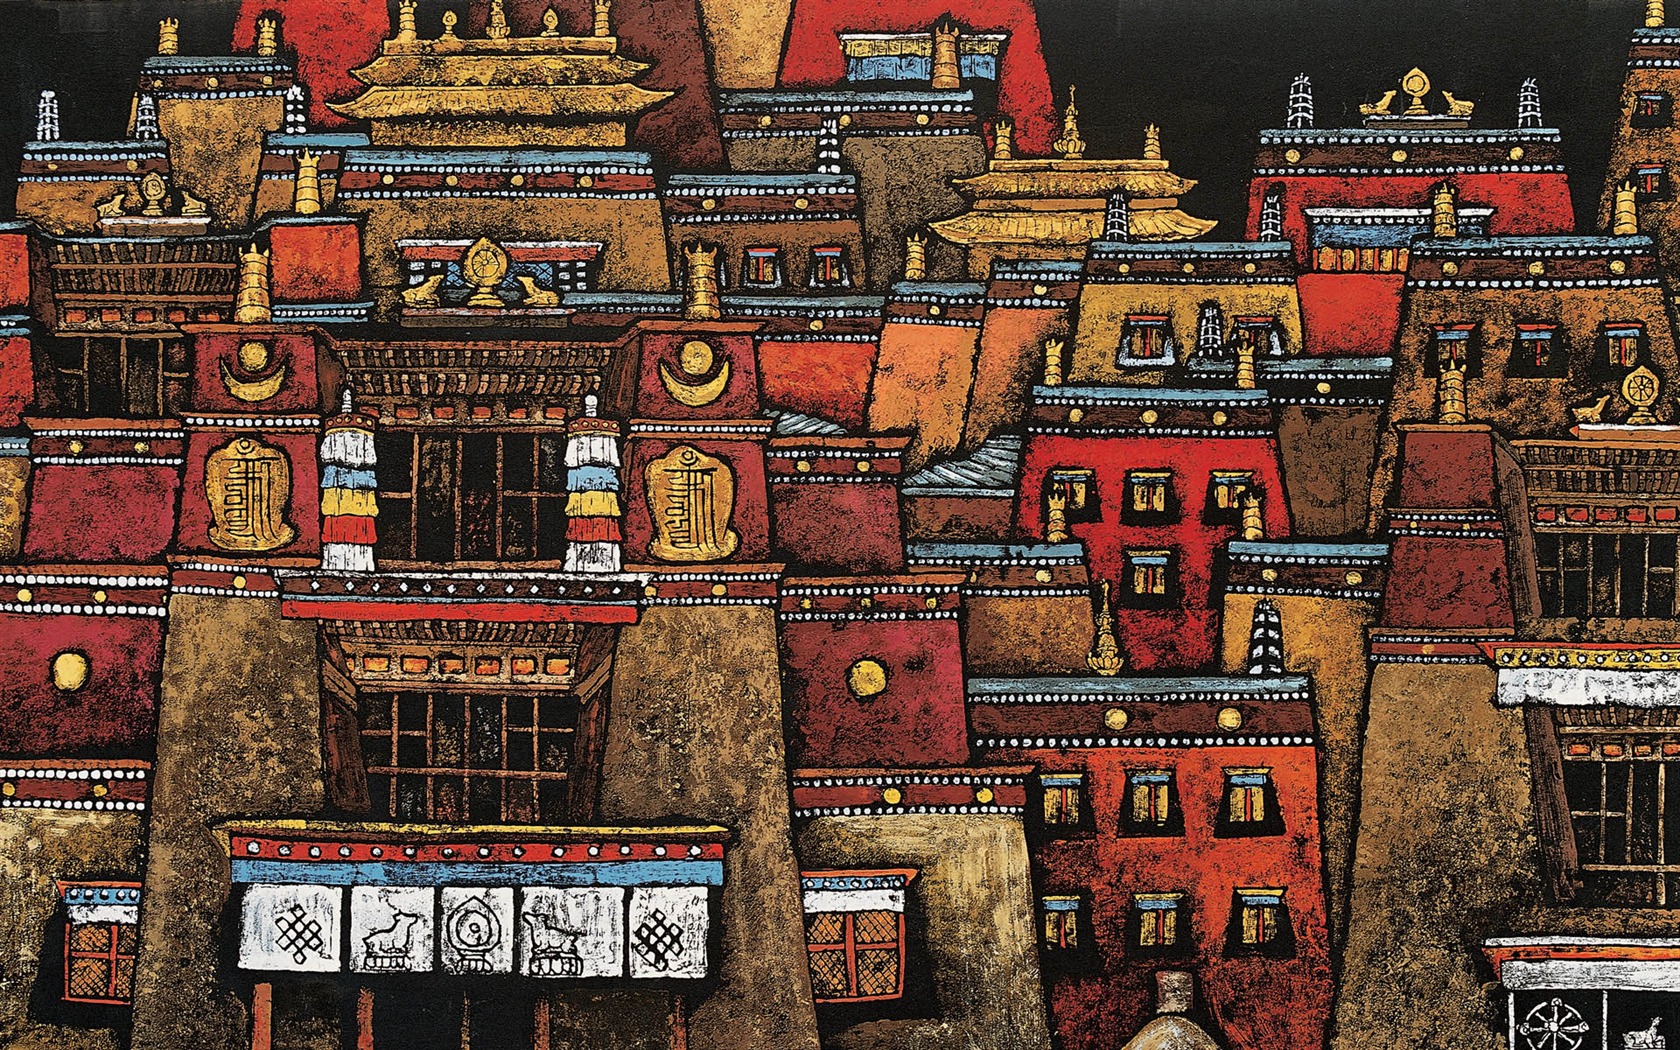 Cheung Pakistan fond d'écran d'impression du Tibet (1) #18 - 1680x1050